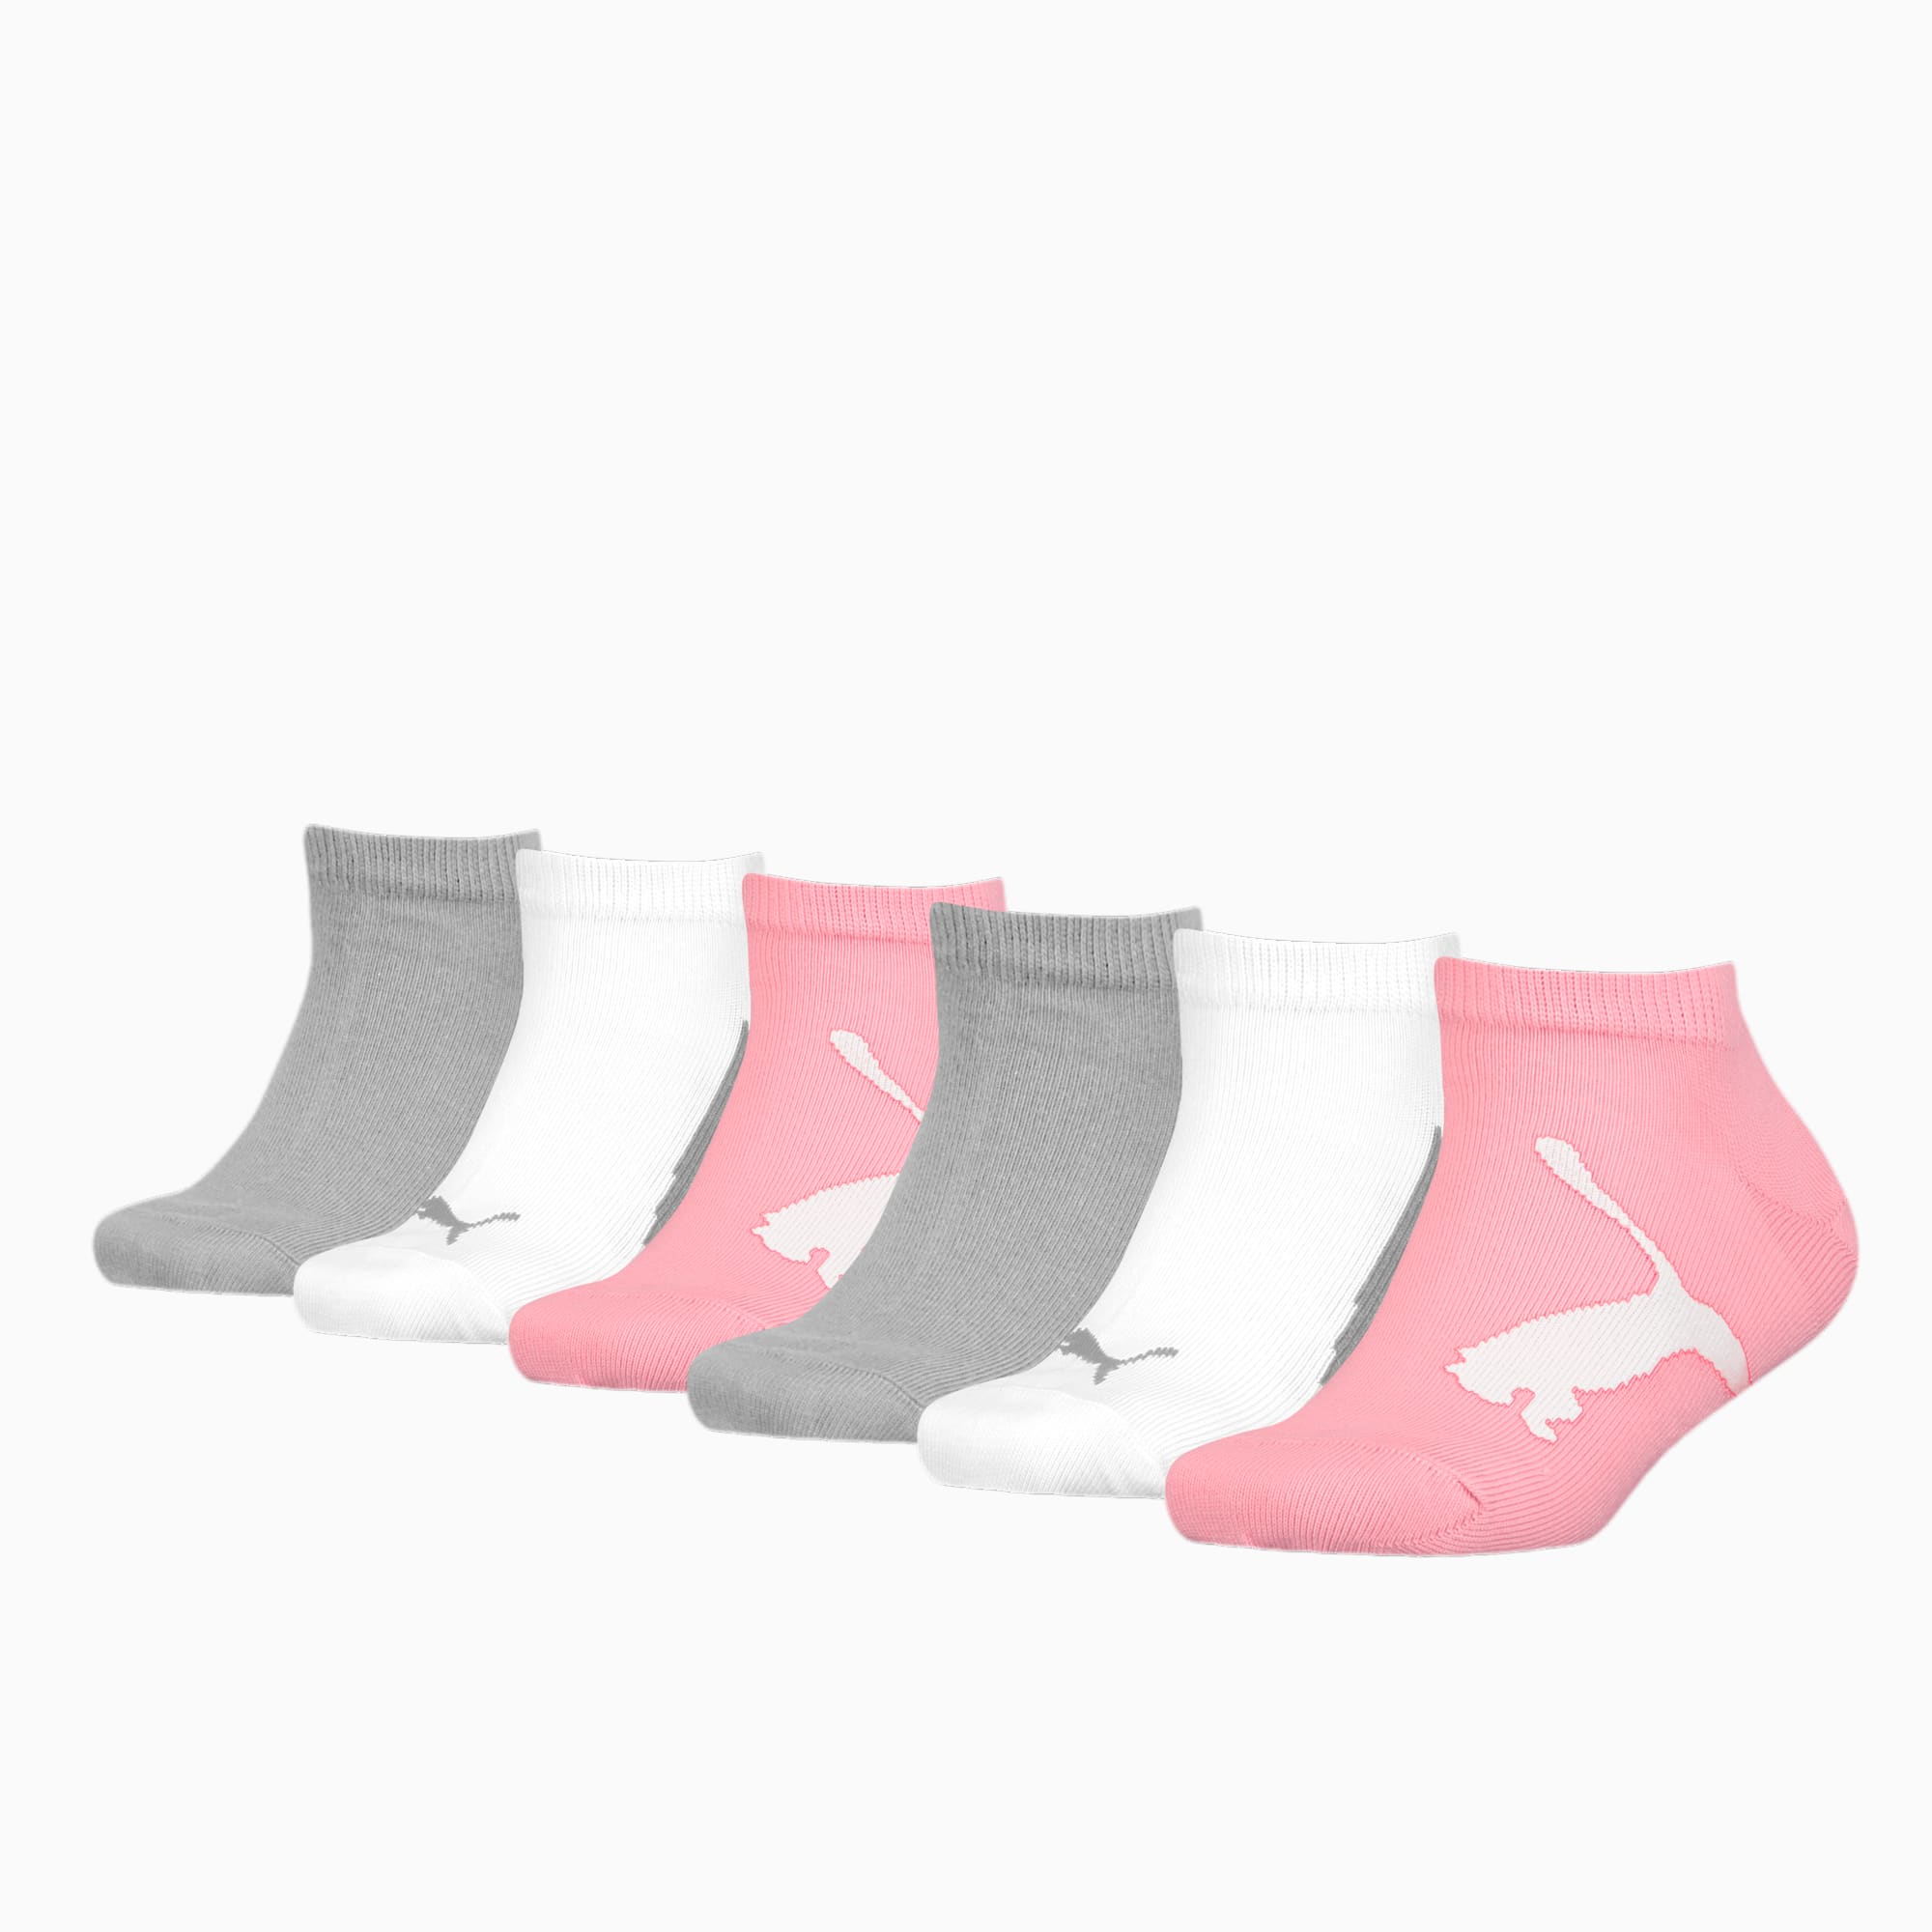 PUMA Kids Bwt Sneaker Socks 6 Pack, Pink/Grey